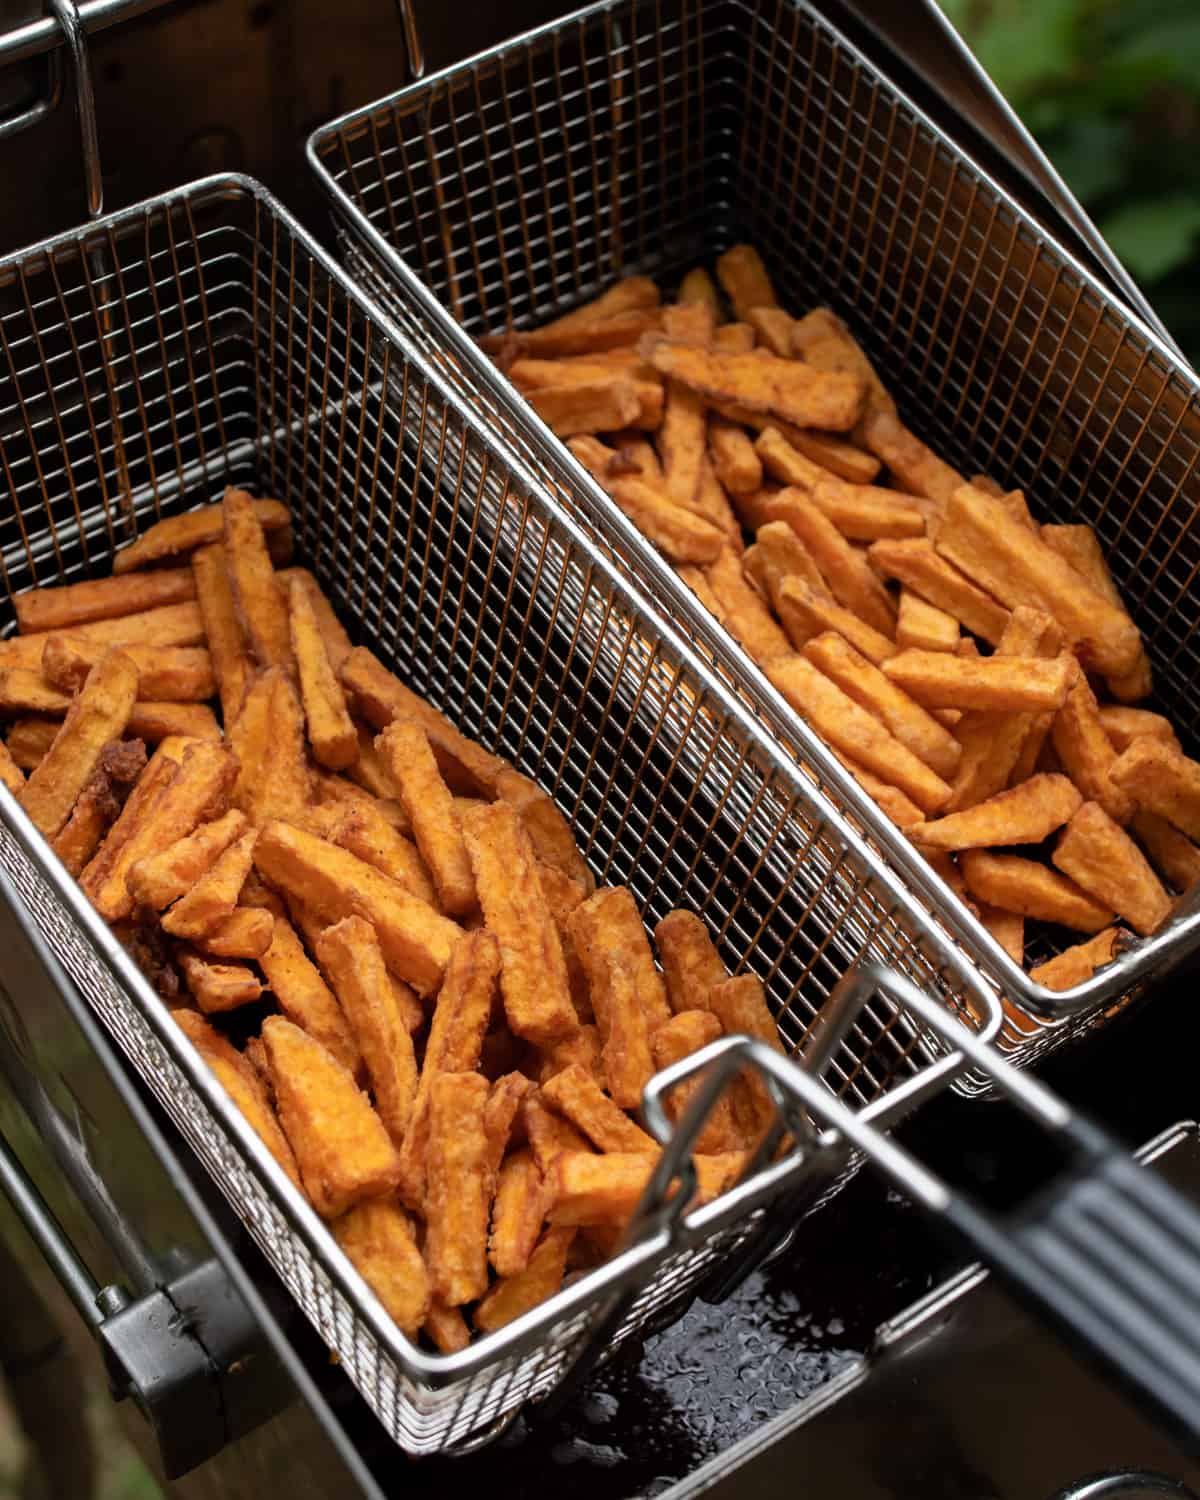 Deep fried sweet potato fries draining in the baskets.